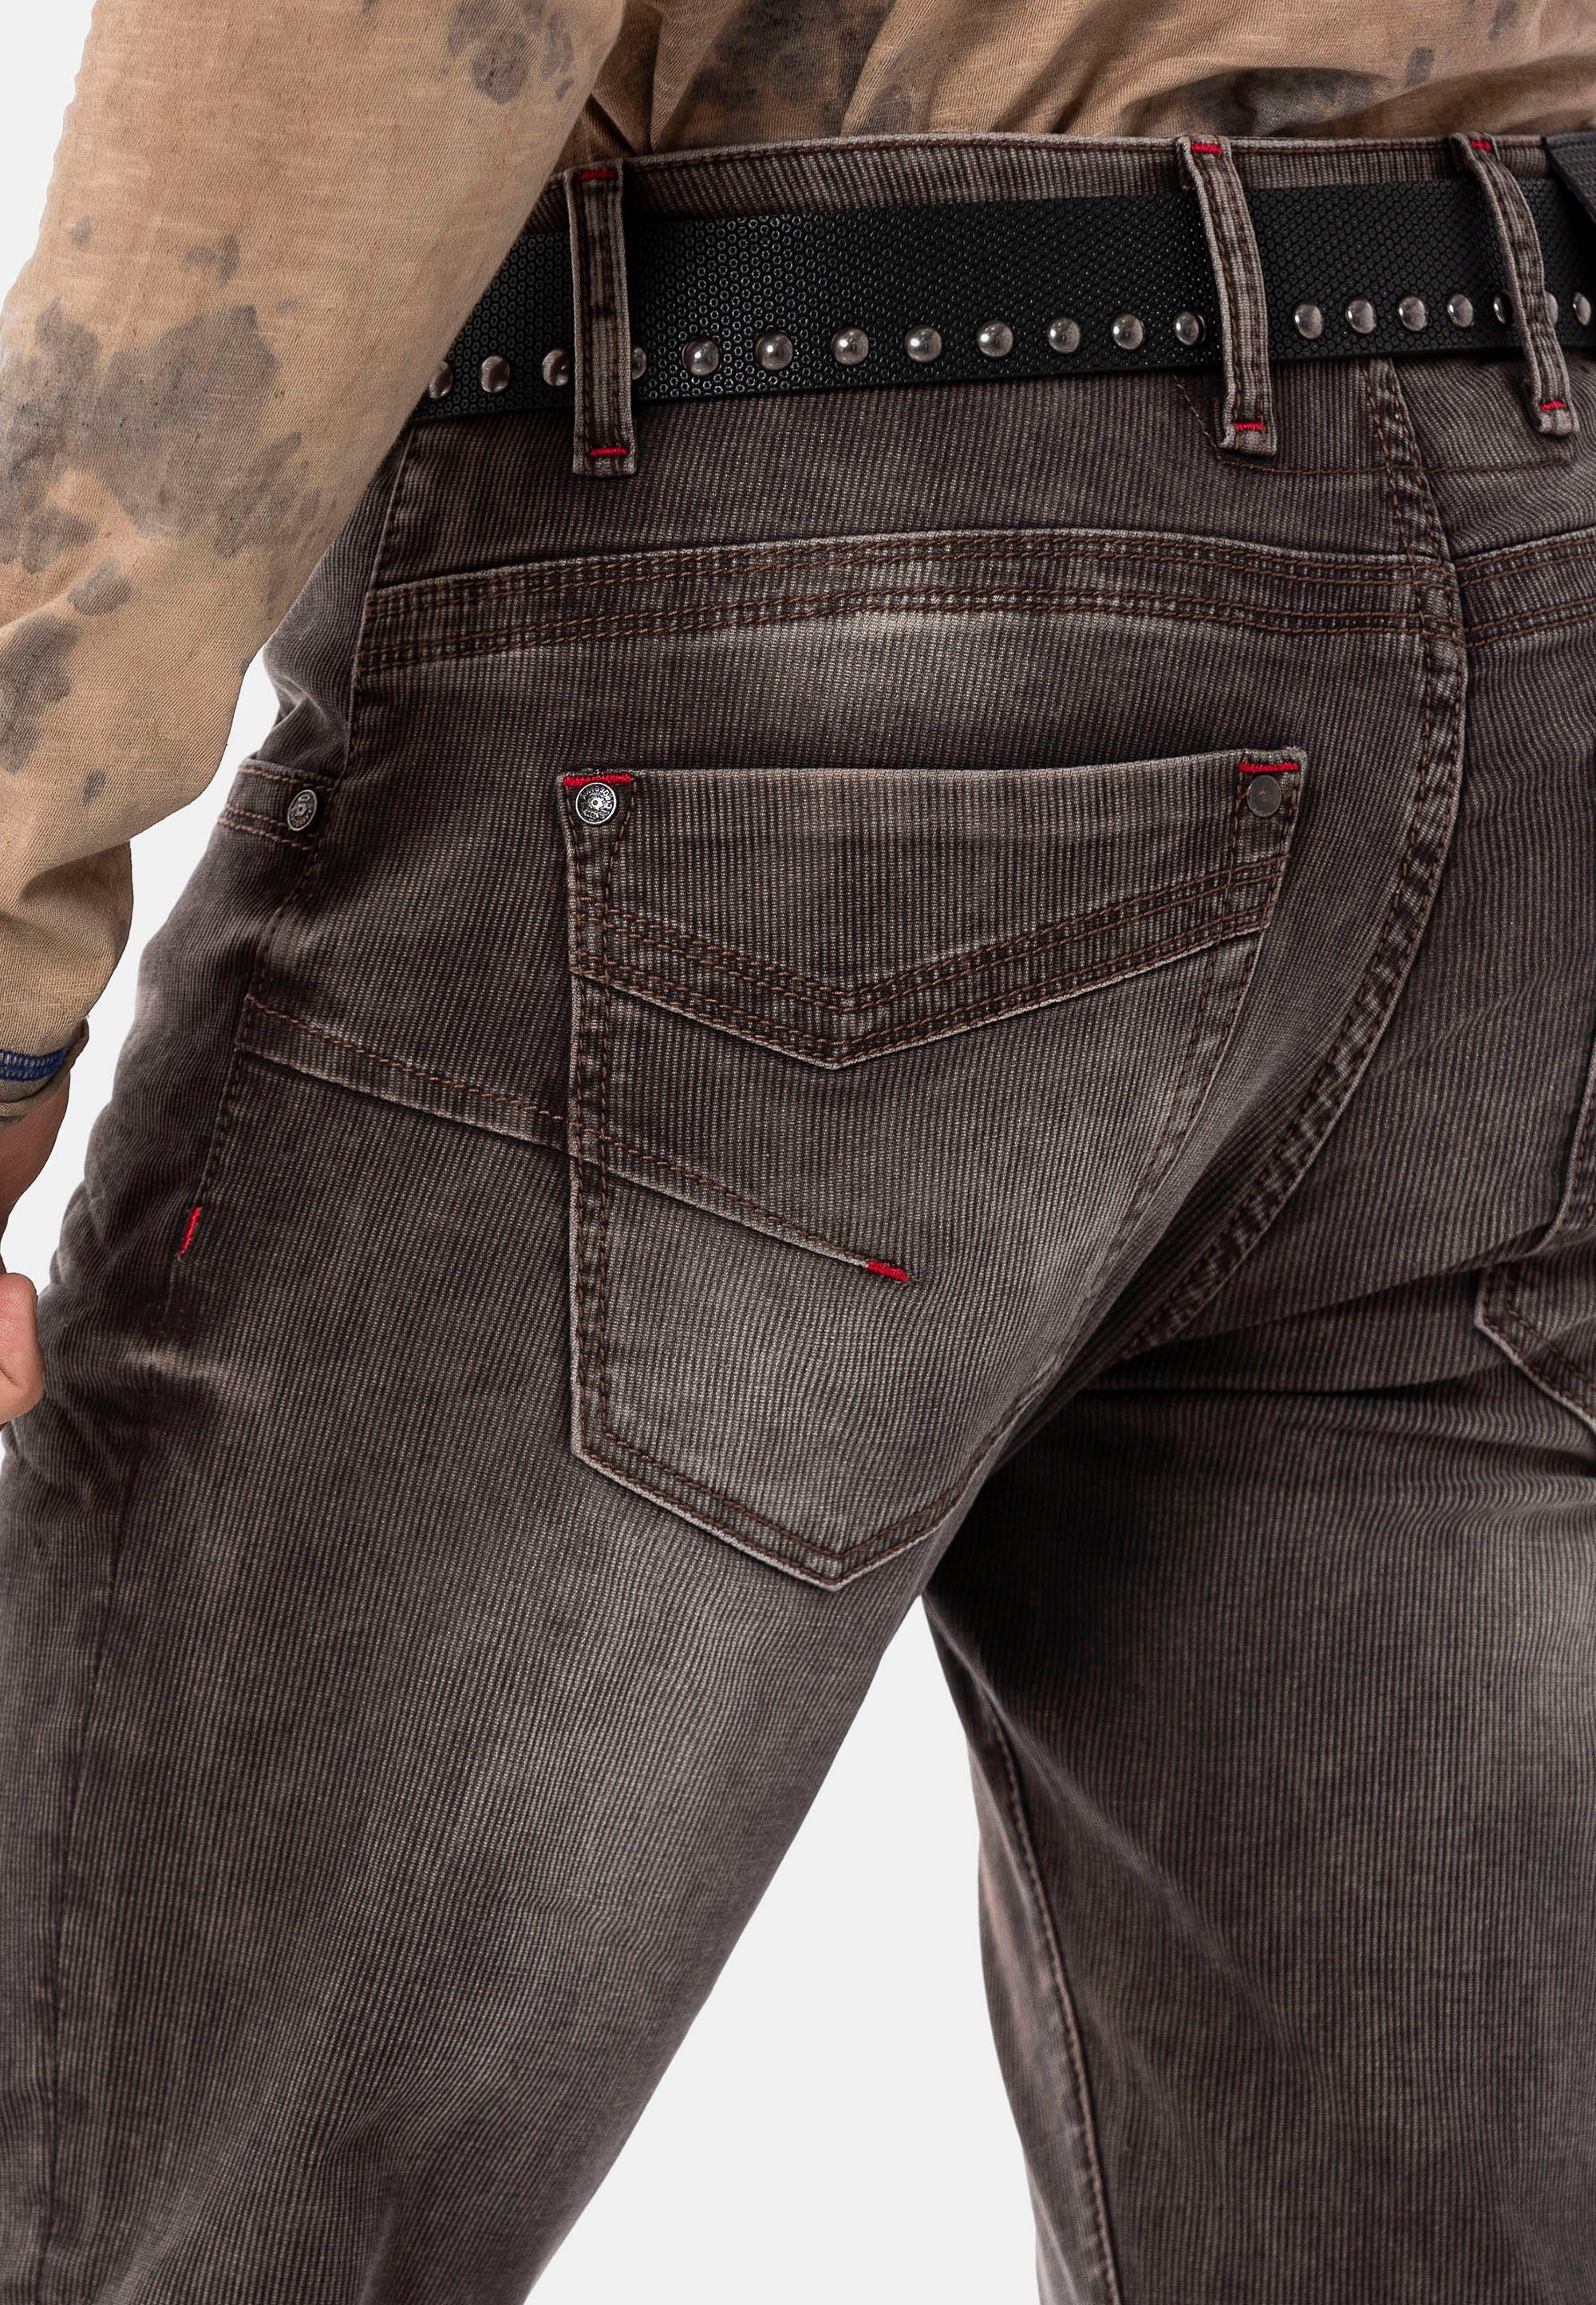 & braun Cord-Design in Cipo Straight-Jeans stilvollem Baxx